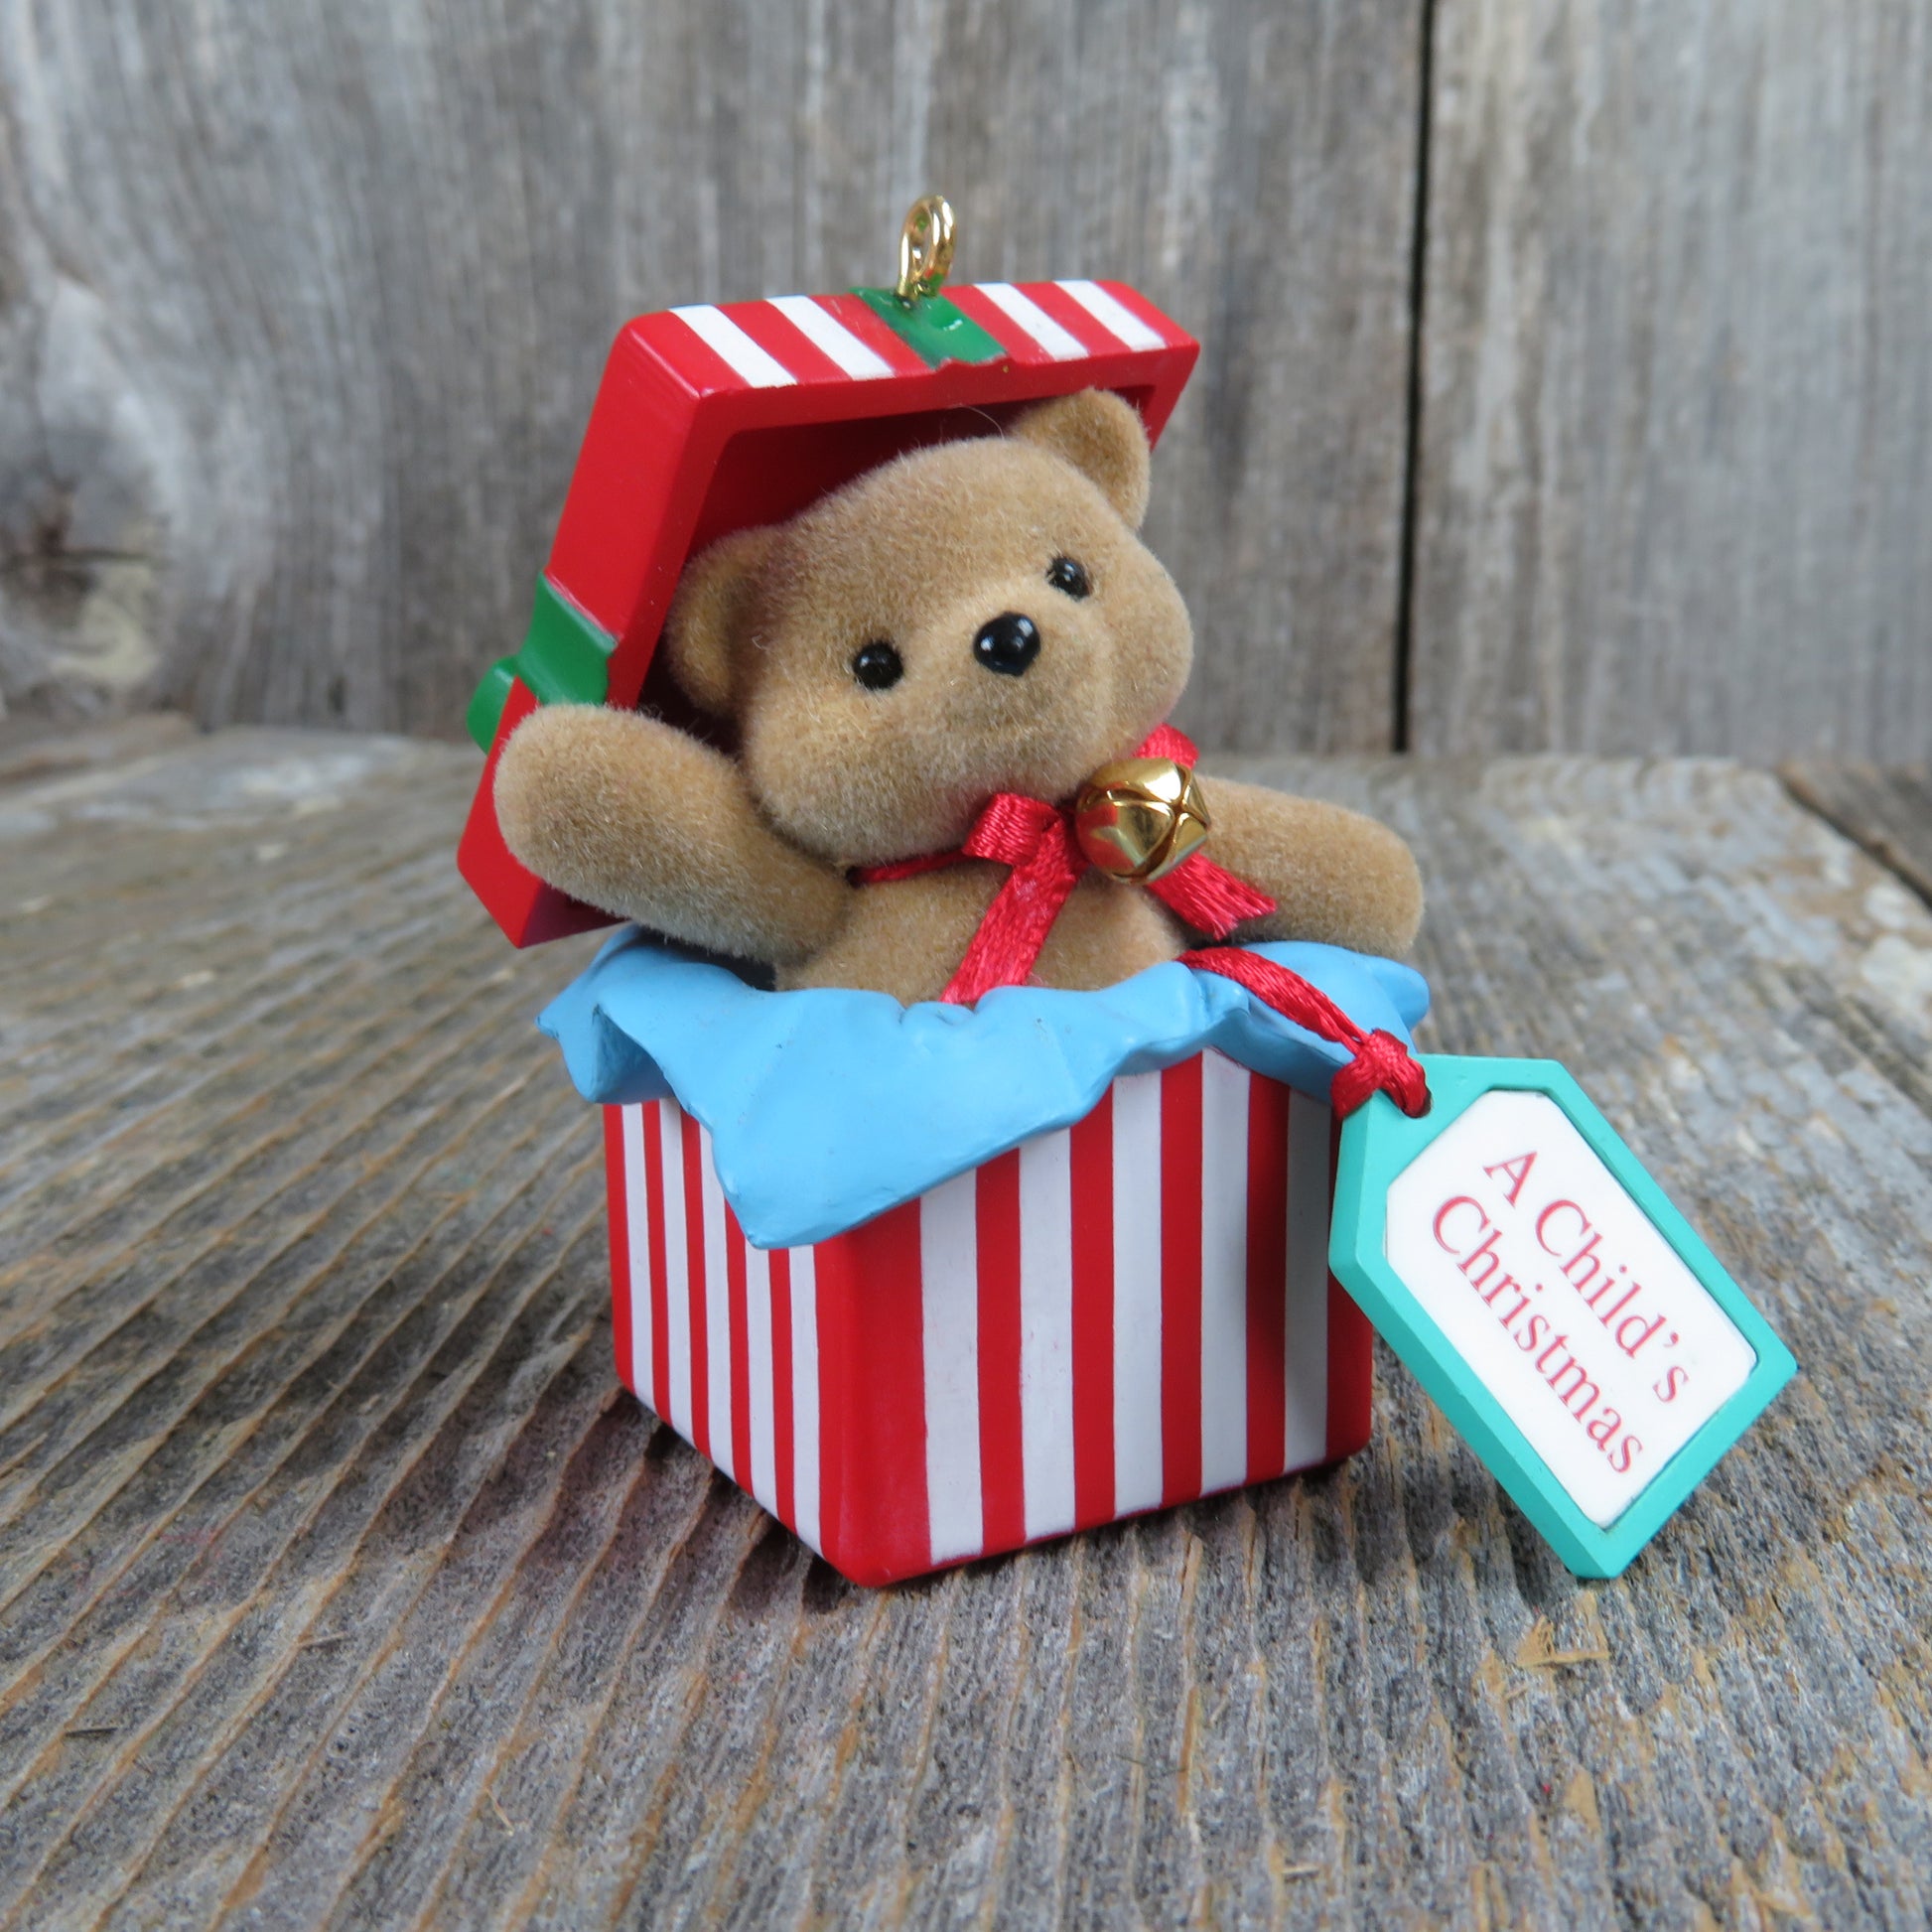 Vintage Child’s Christmas Bear Ornament 1993 Hallmark Teddy Bear Gift Box Surprise - At Grandma's Table